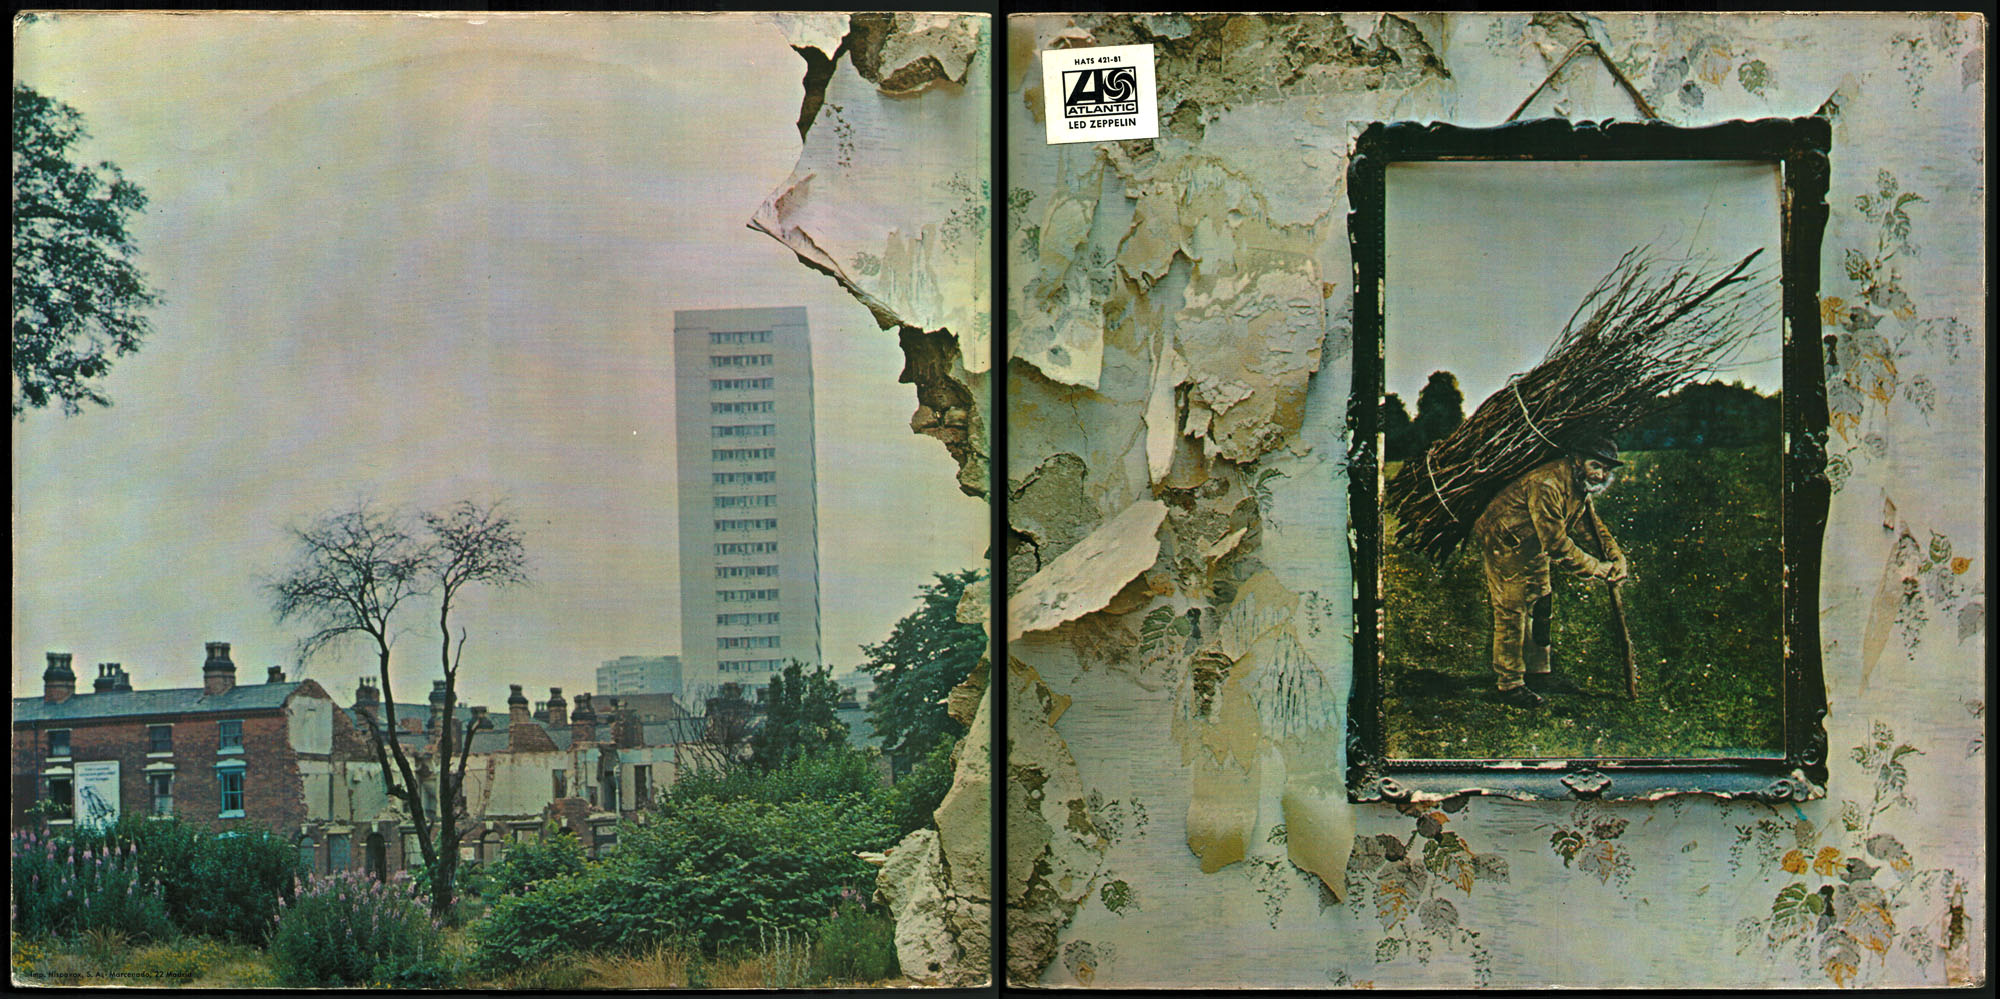 Led Zeppelin IV - Original 1971 Spanish Atlantic label 8-track LP